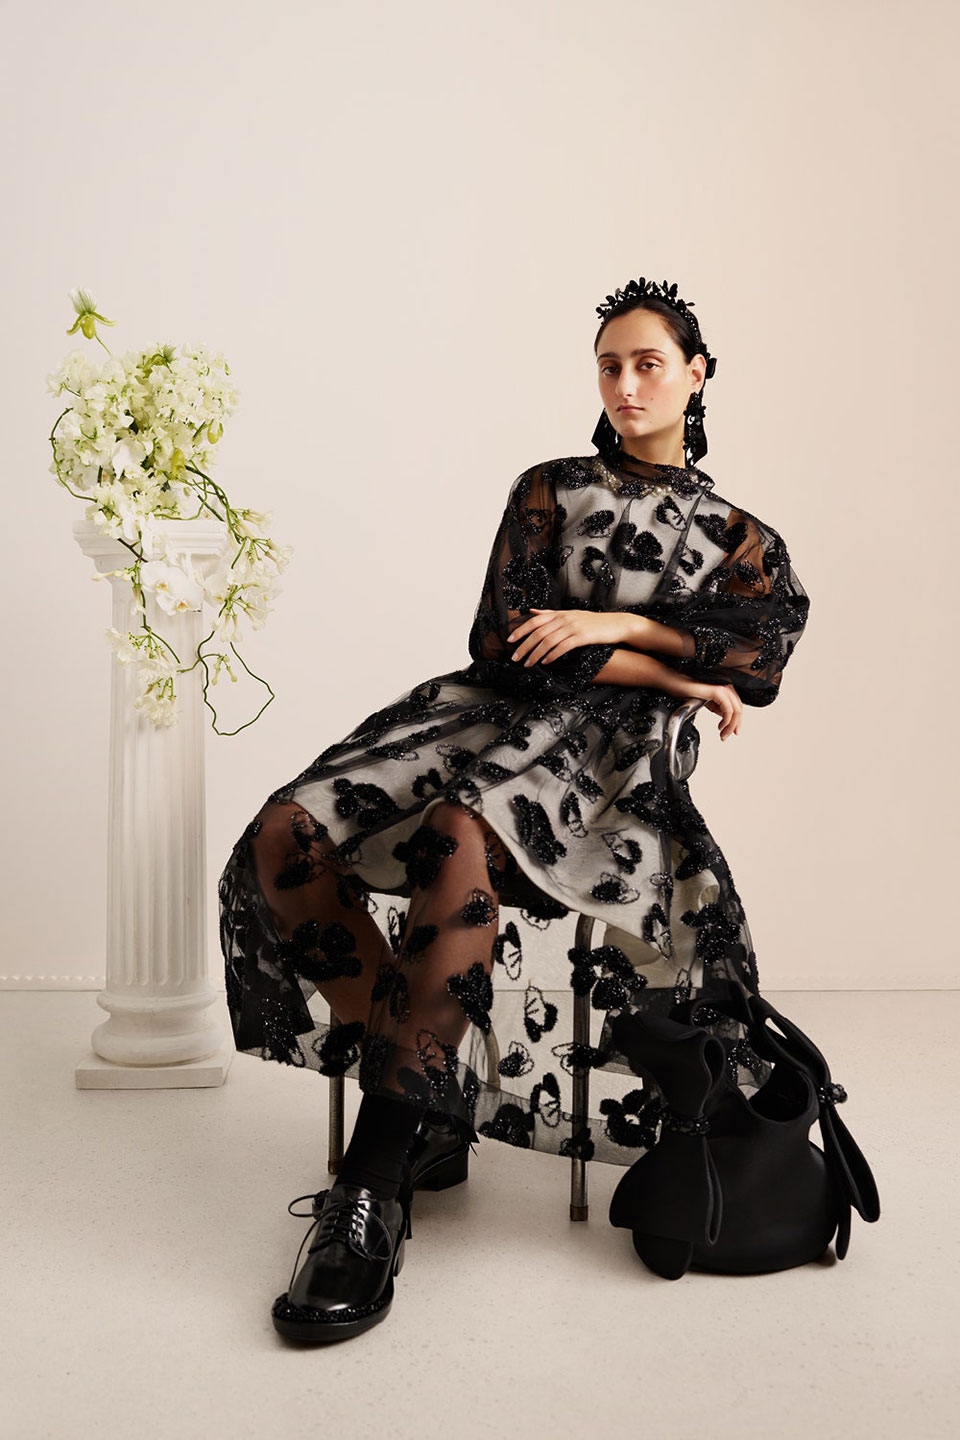 Design: Simone Rocha x H&M collaboration lookbook revealed; A 